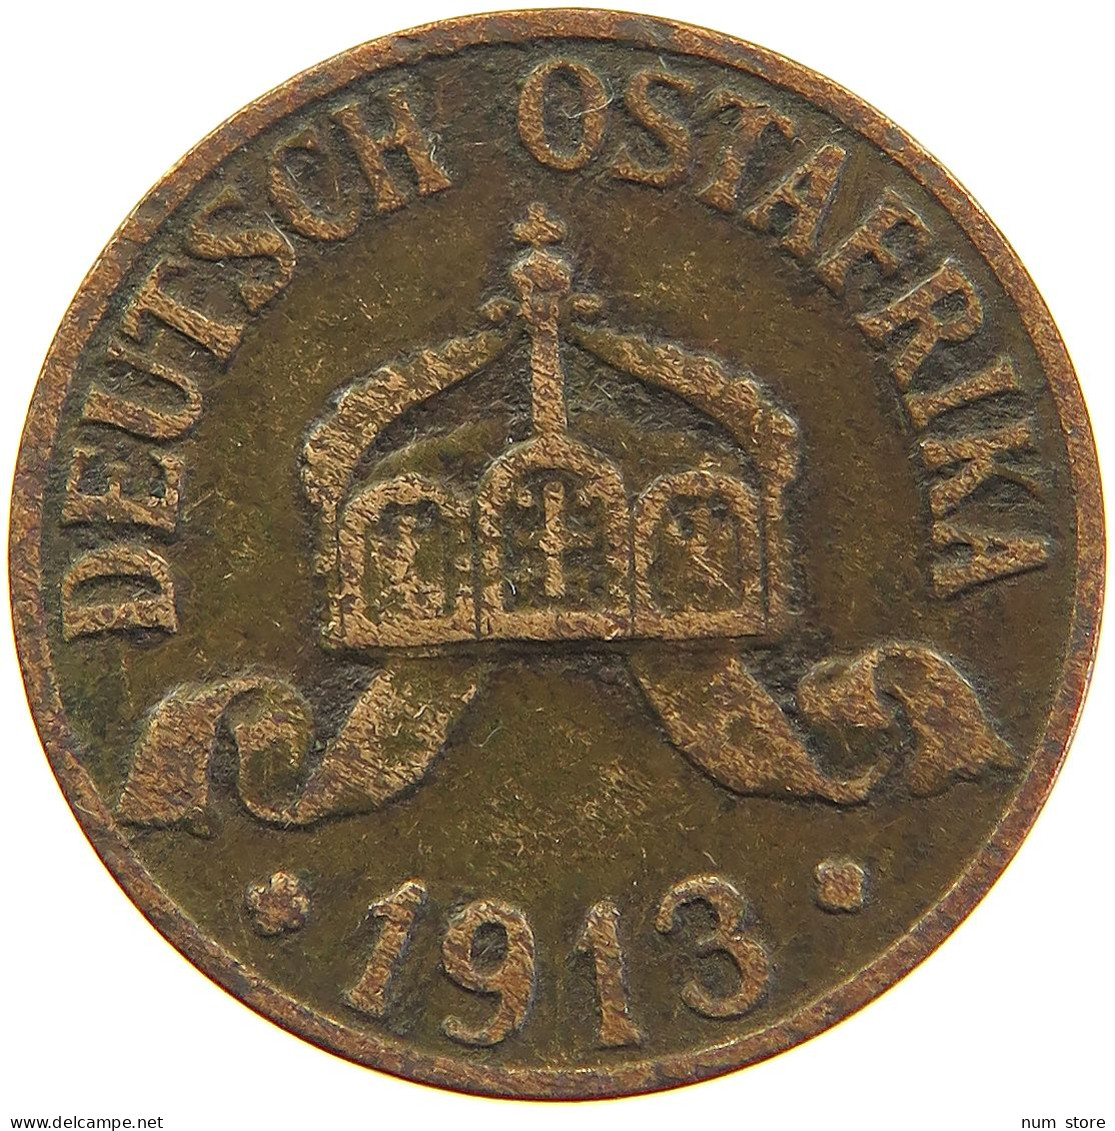 GERMANY EMPIRE 1 HELLER 1913 A OSTAFRIKA #s081 0217 - German East Africa